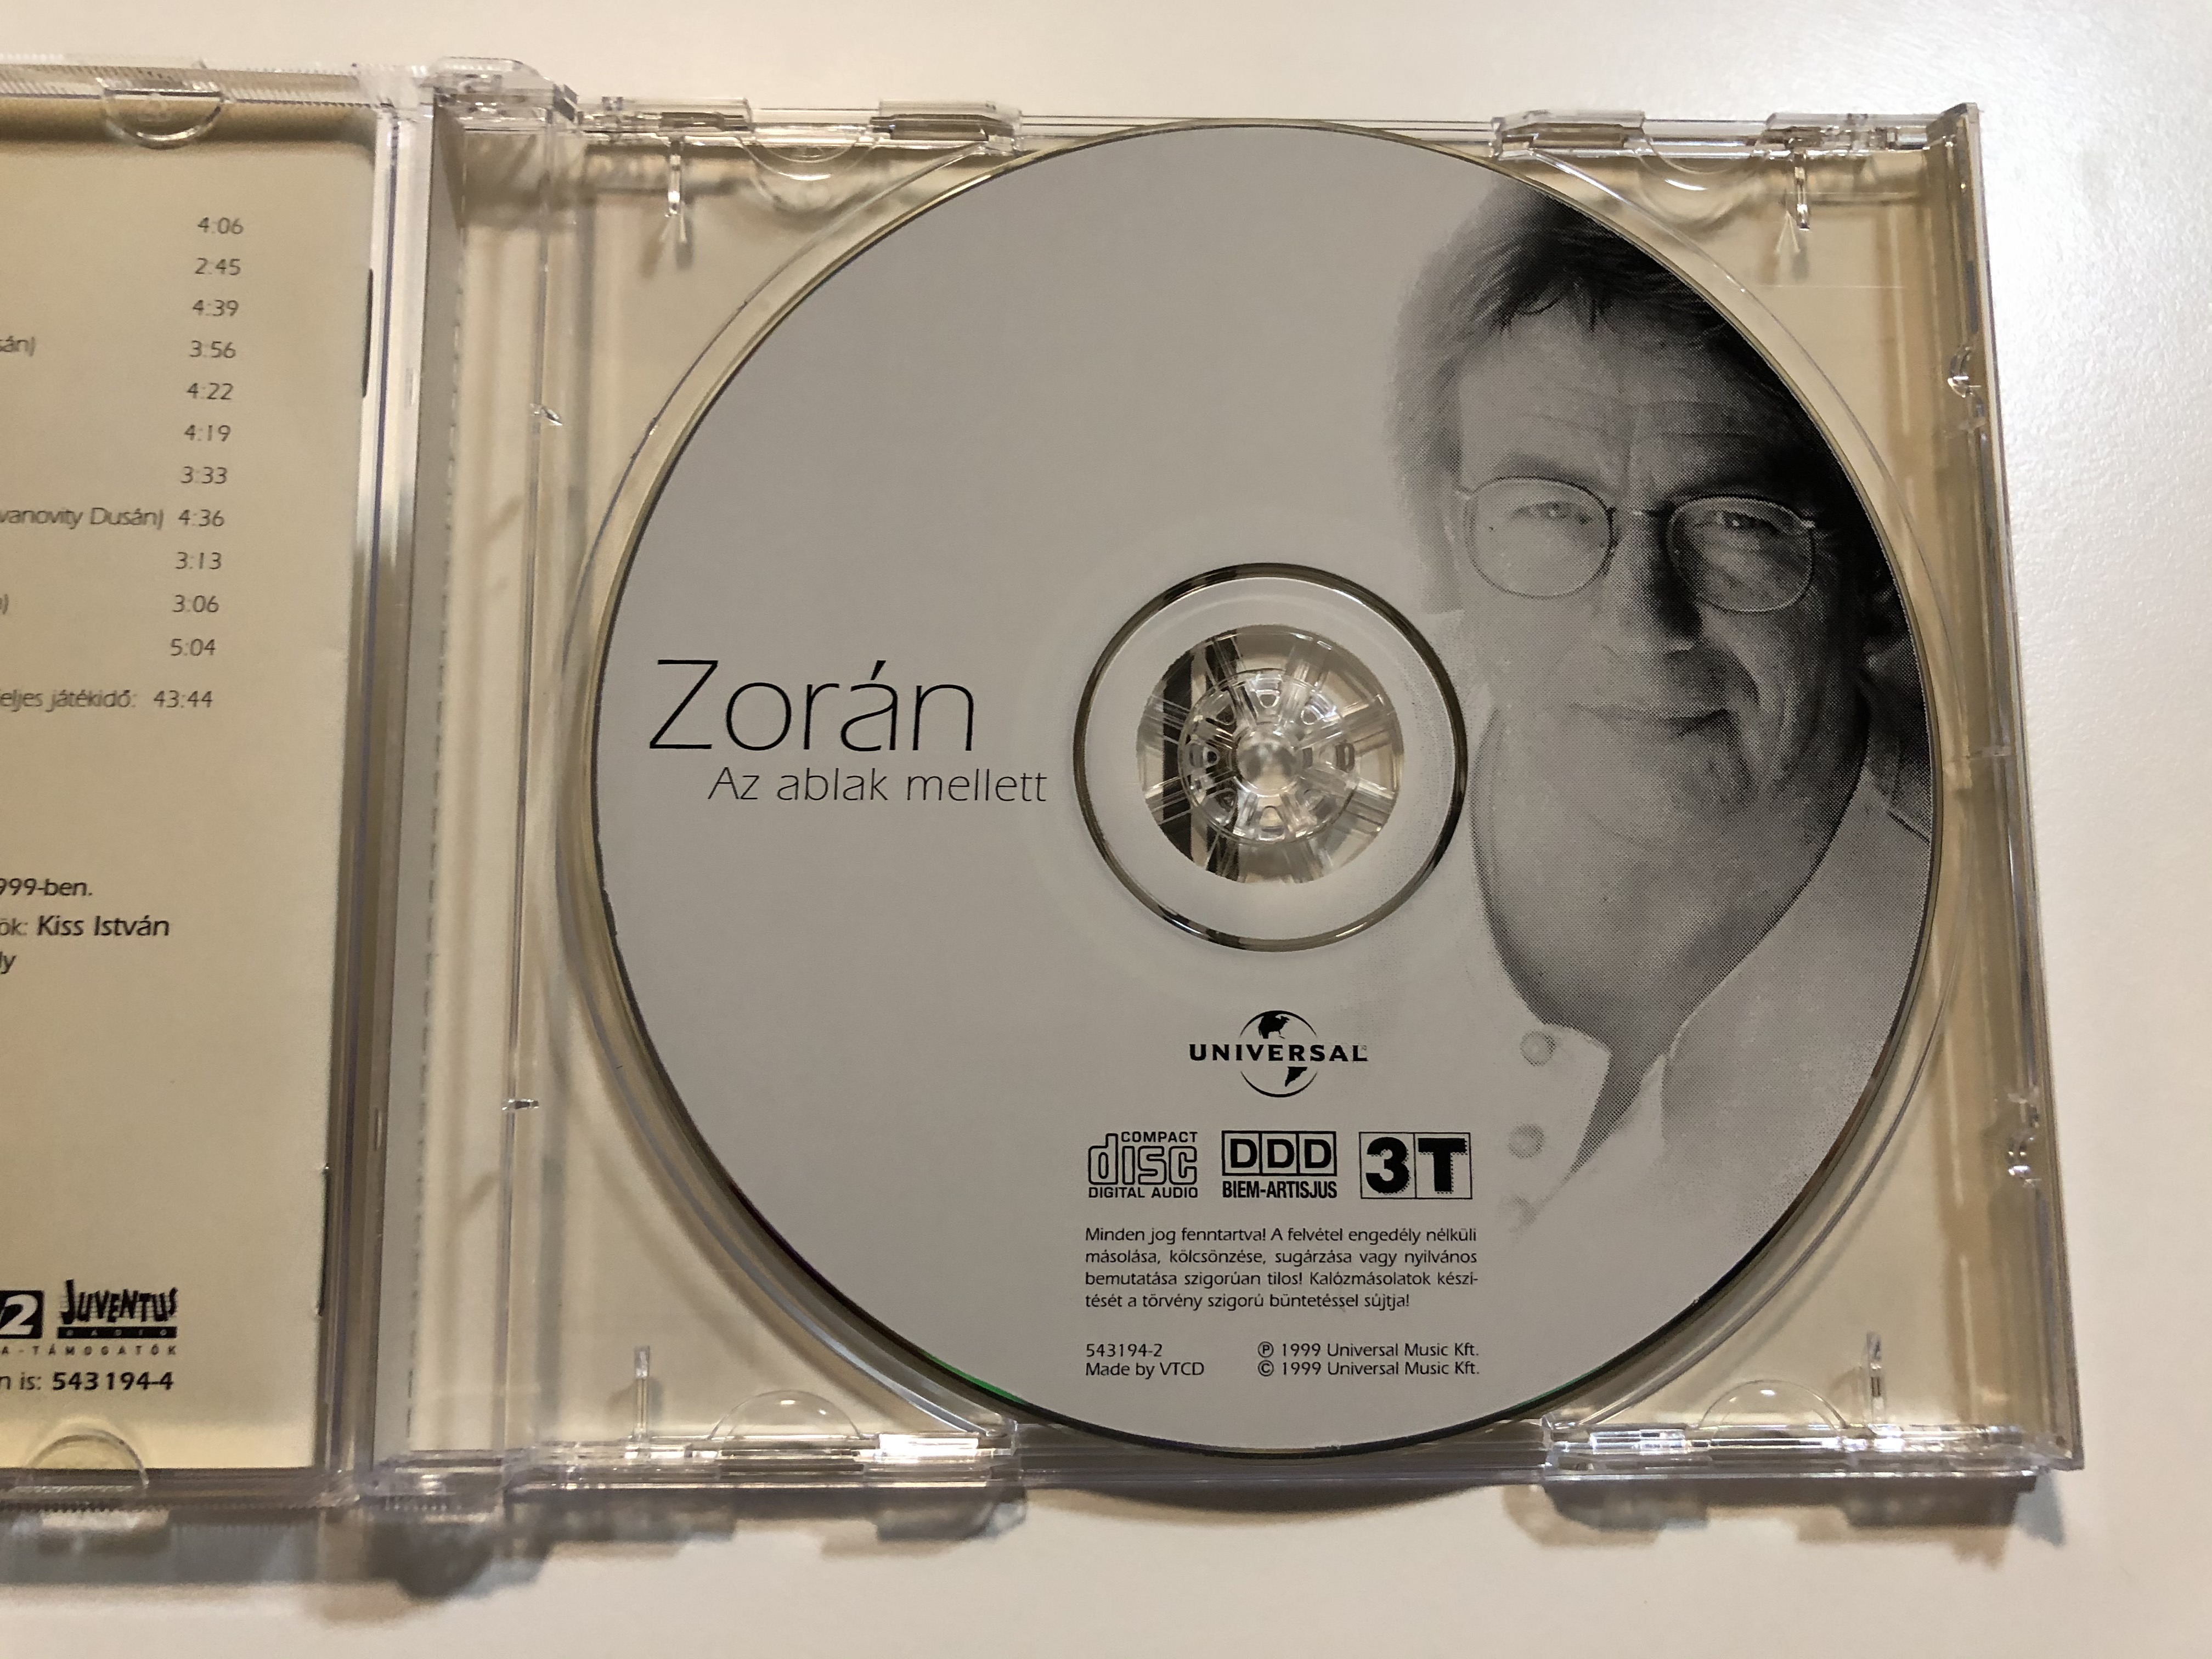 zor-n-az-ablak-mellett-universal-music-audio-cd-1999-543-194-2-4-.jpg